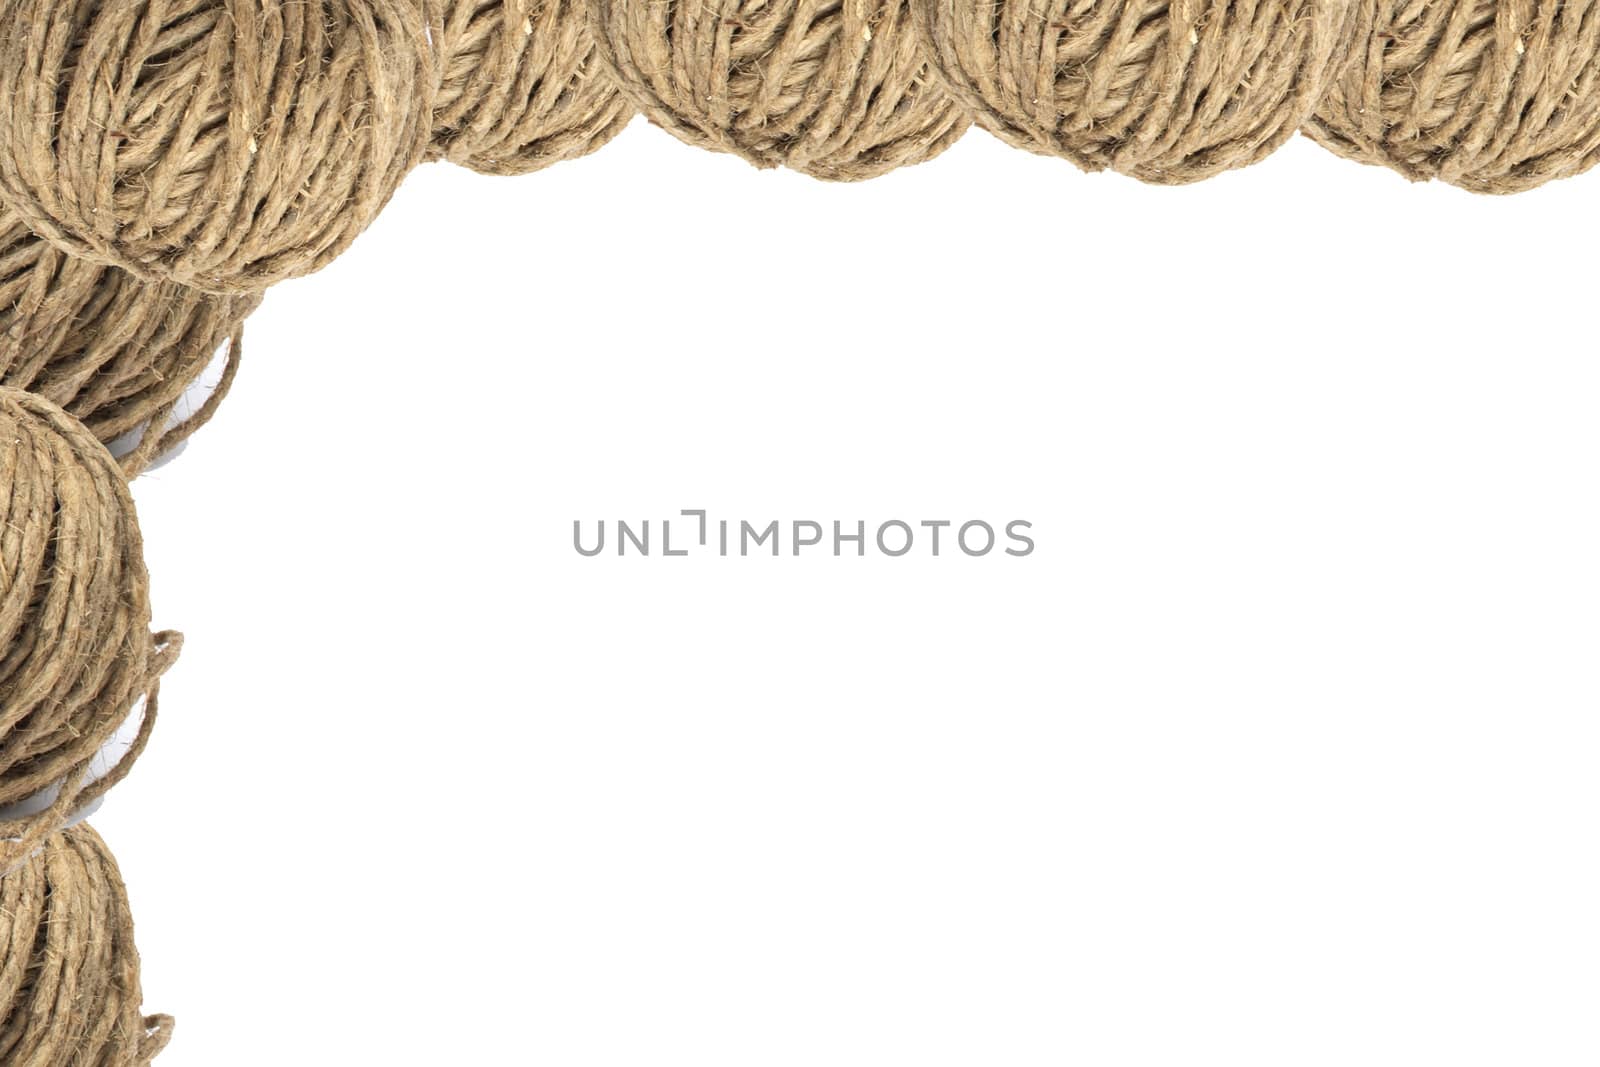  rope background by jonnysek